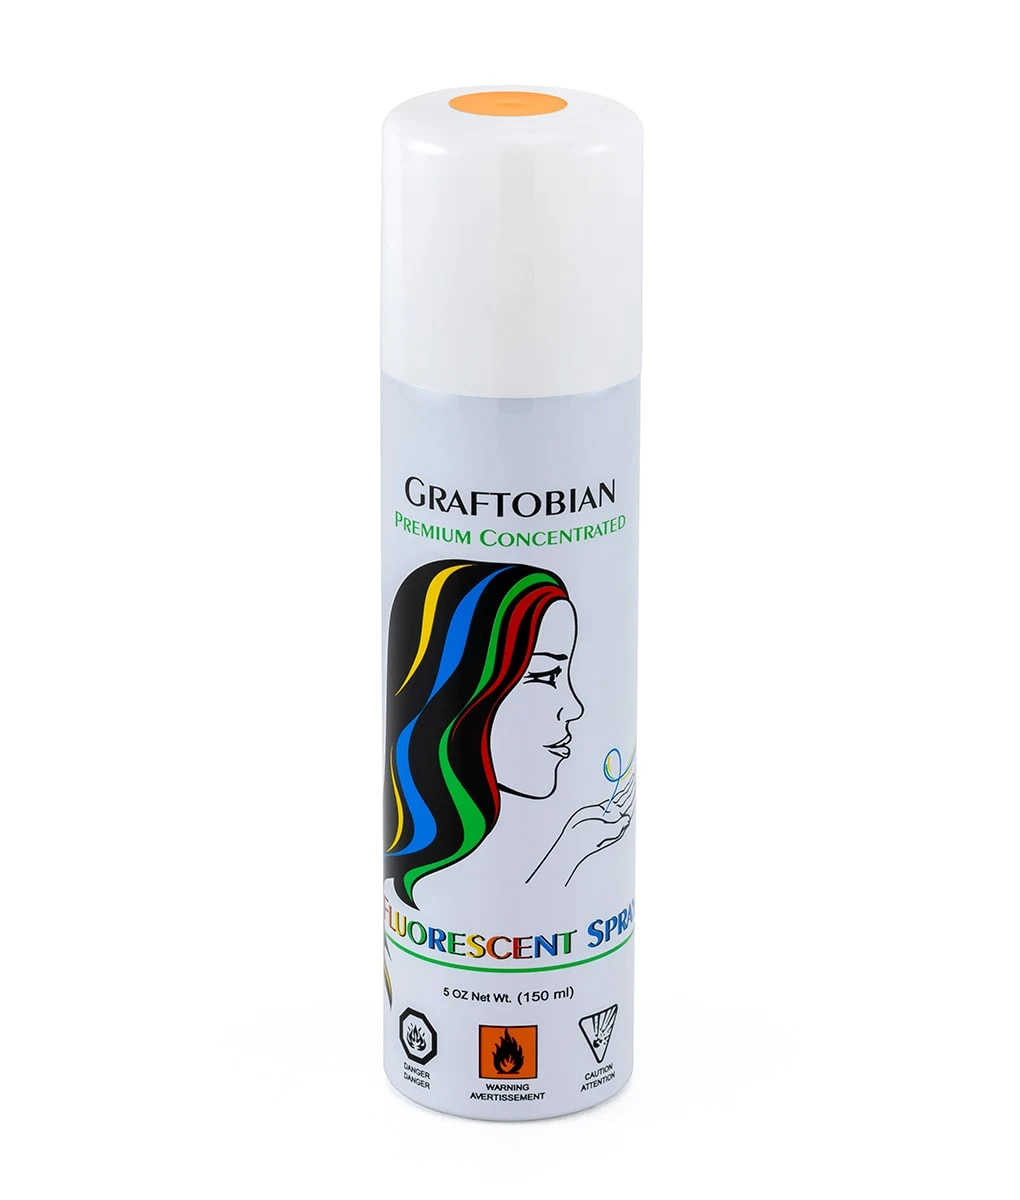 Graftobian Hair Color Spray